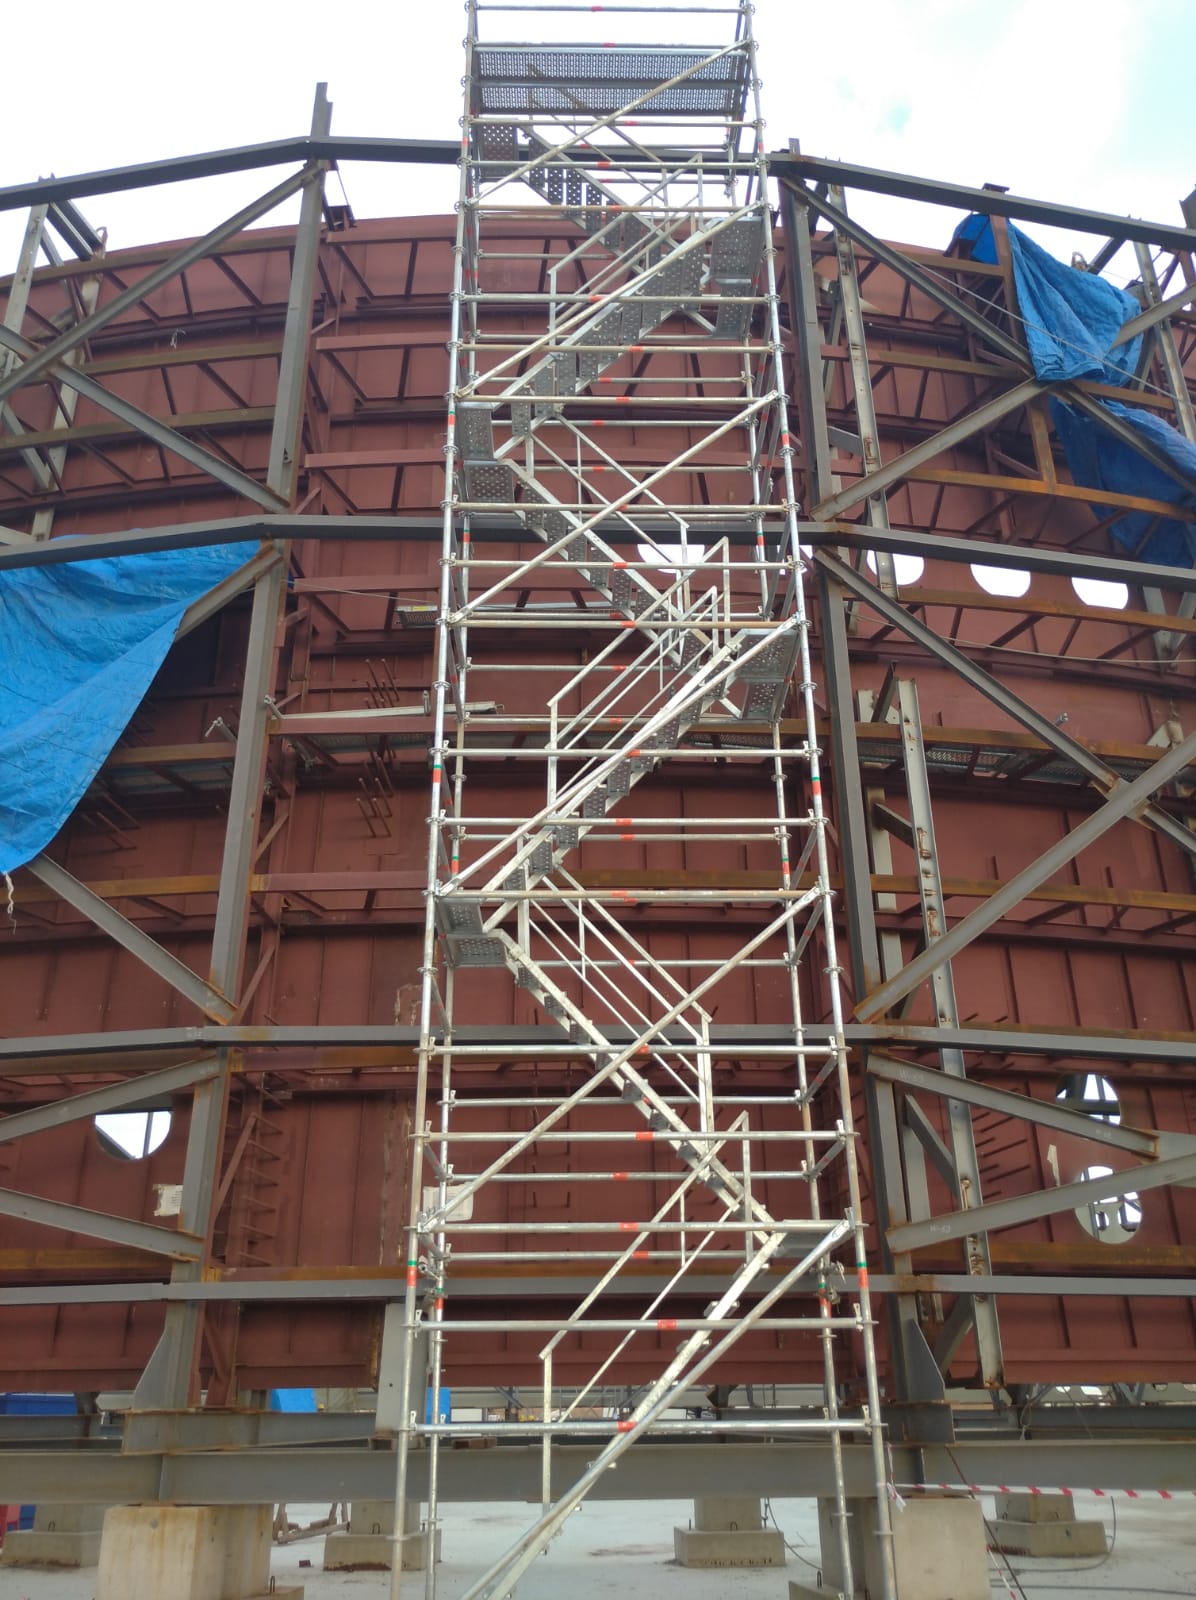 yagmur scaffolding stair tower 03 - Multidirectional Scaffolding System